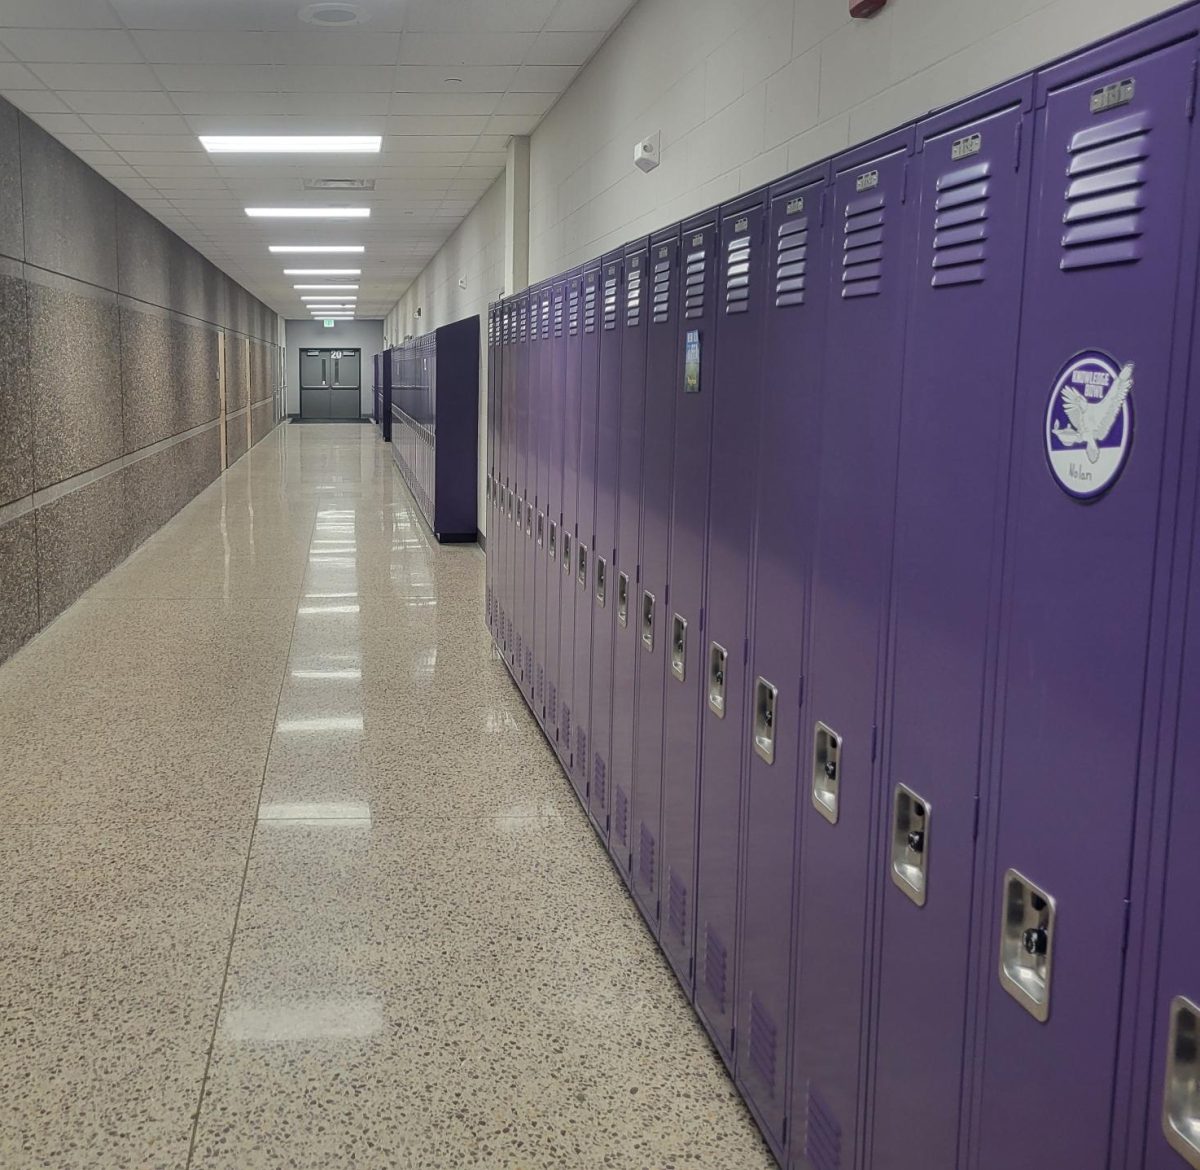 The freshman hallway empty.